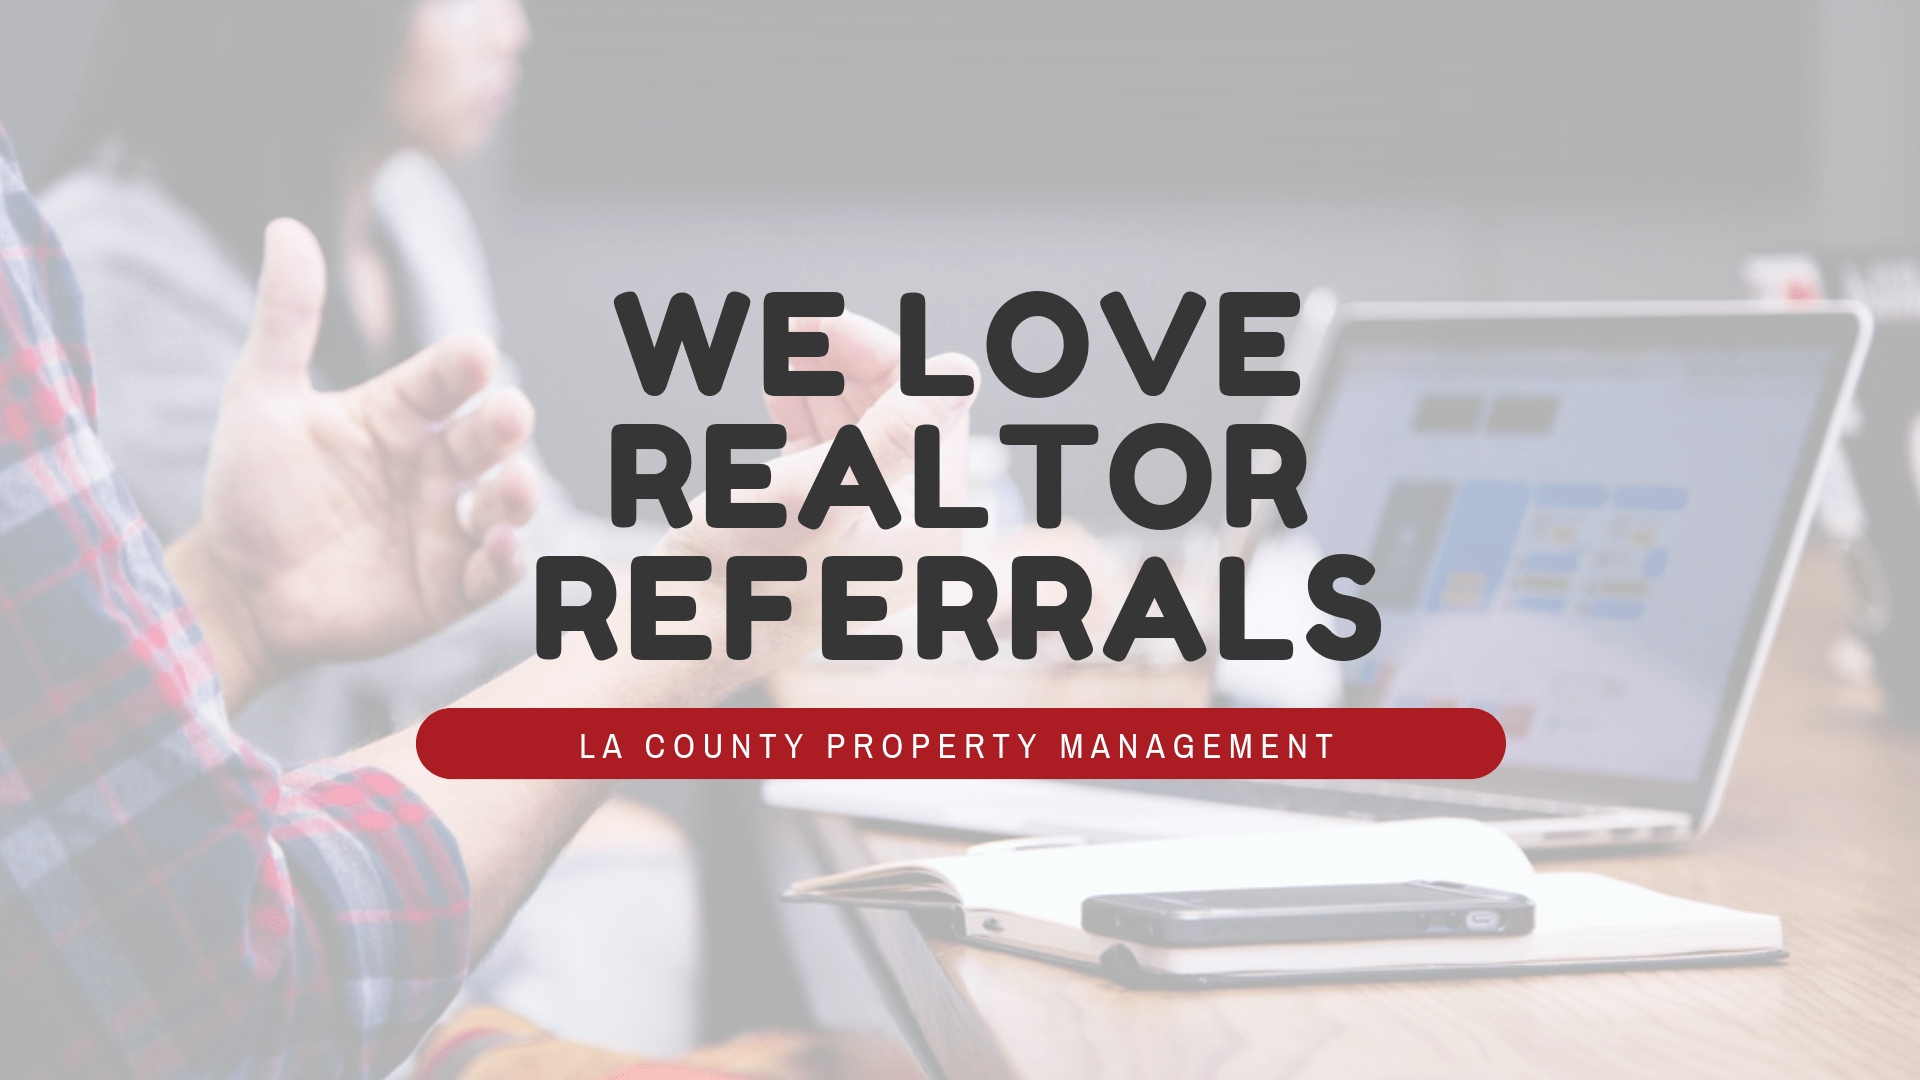 We Love Realtor Referrals - LA County Property Management